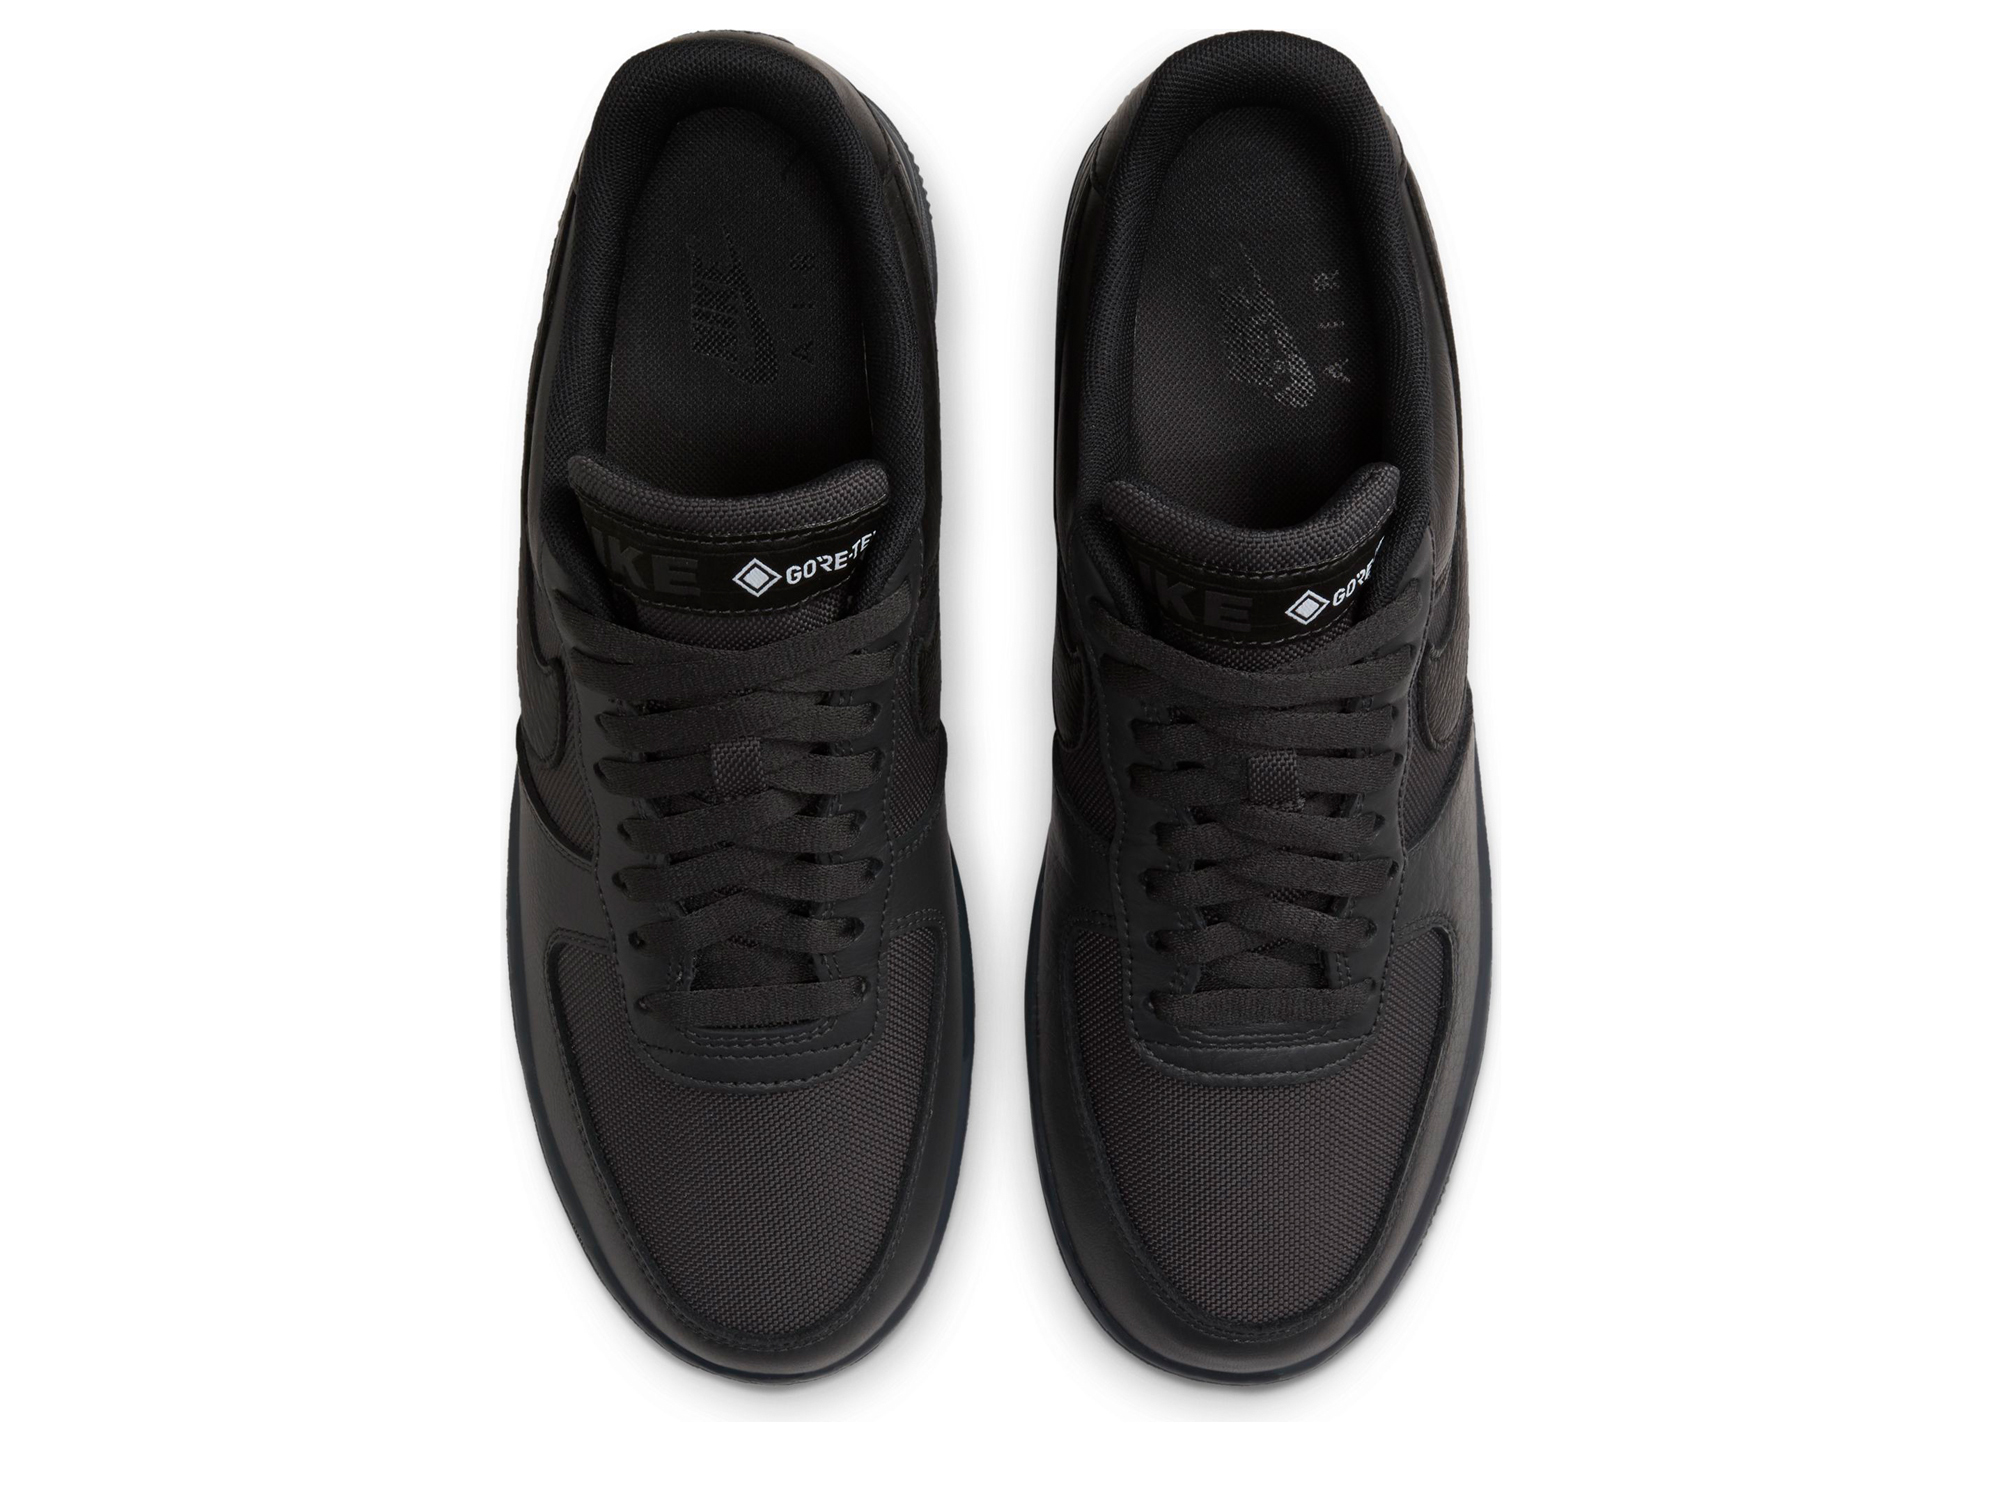 Nike Air Force 1 GTX Herren Sneaker